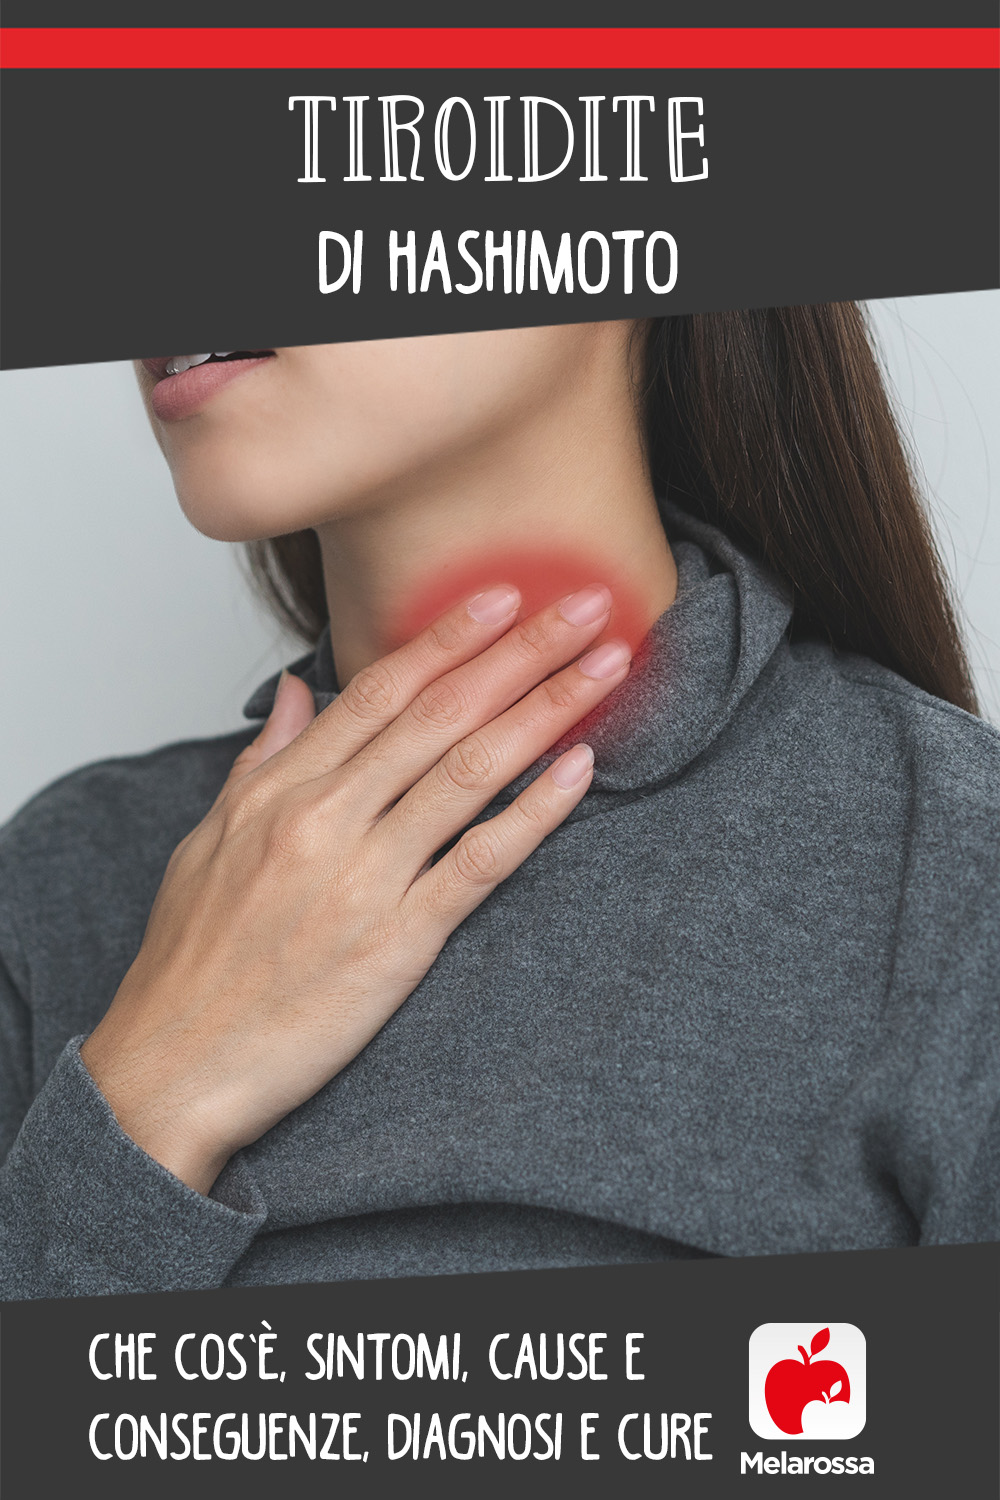 tiroidite di hashimoto: cos'è, cause, sintomi e cure 